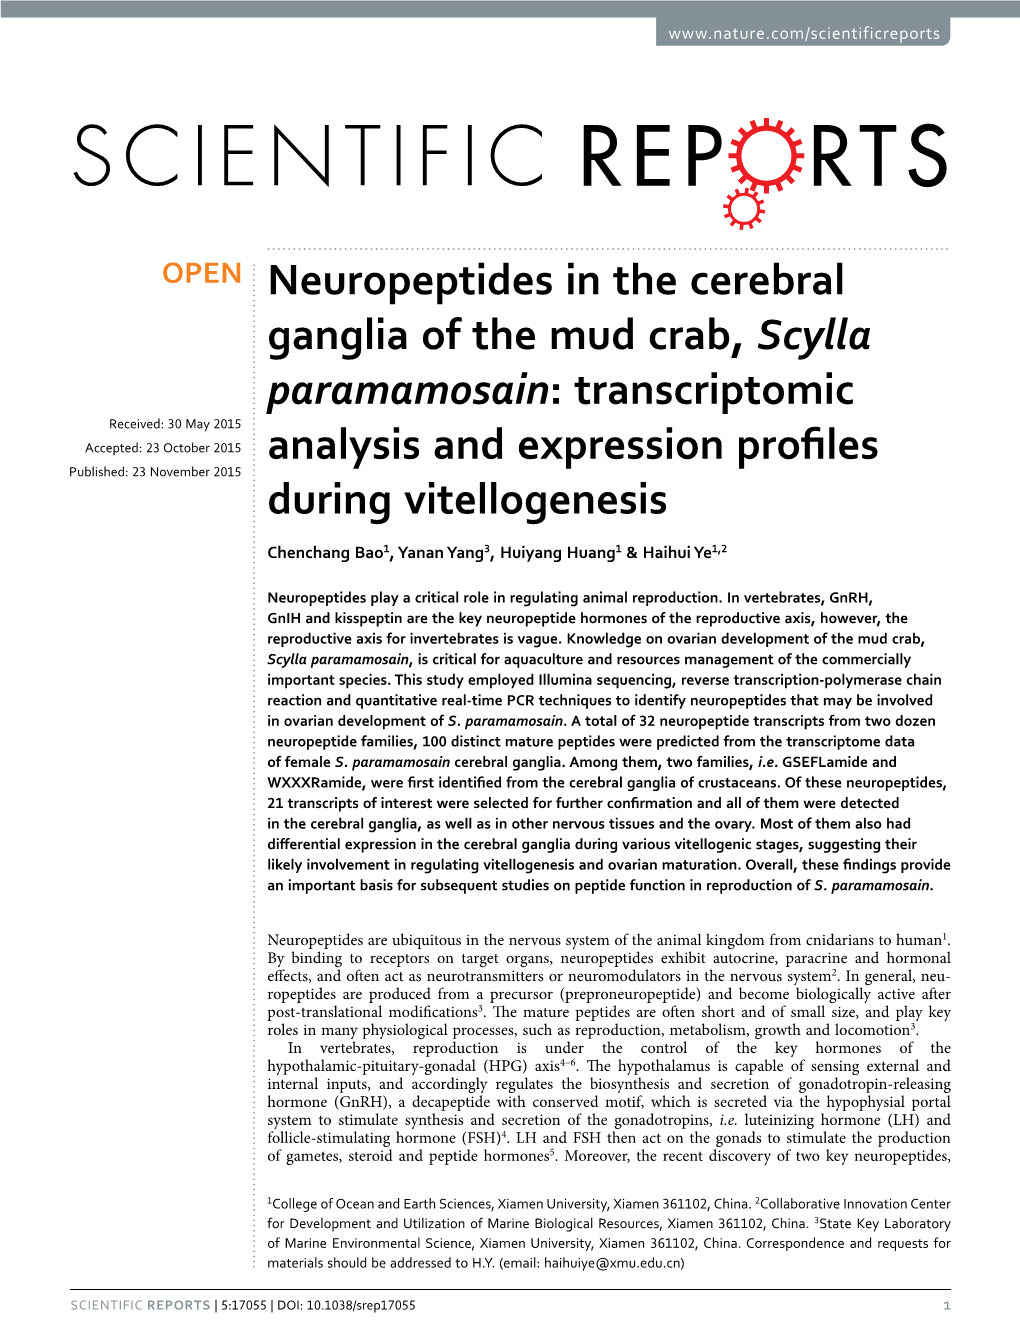 Neuropeptides in the Cerebral Ganglia of the Mud Crab, Scylla